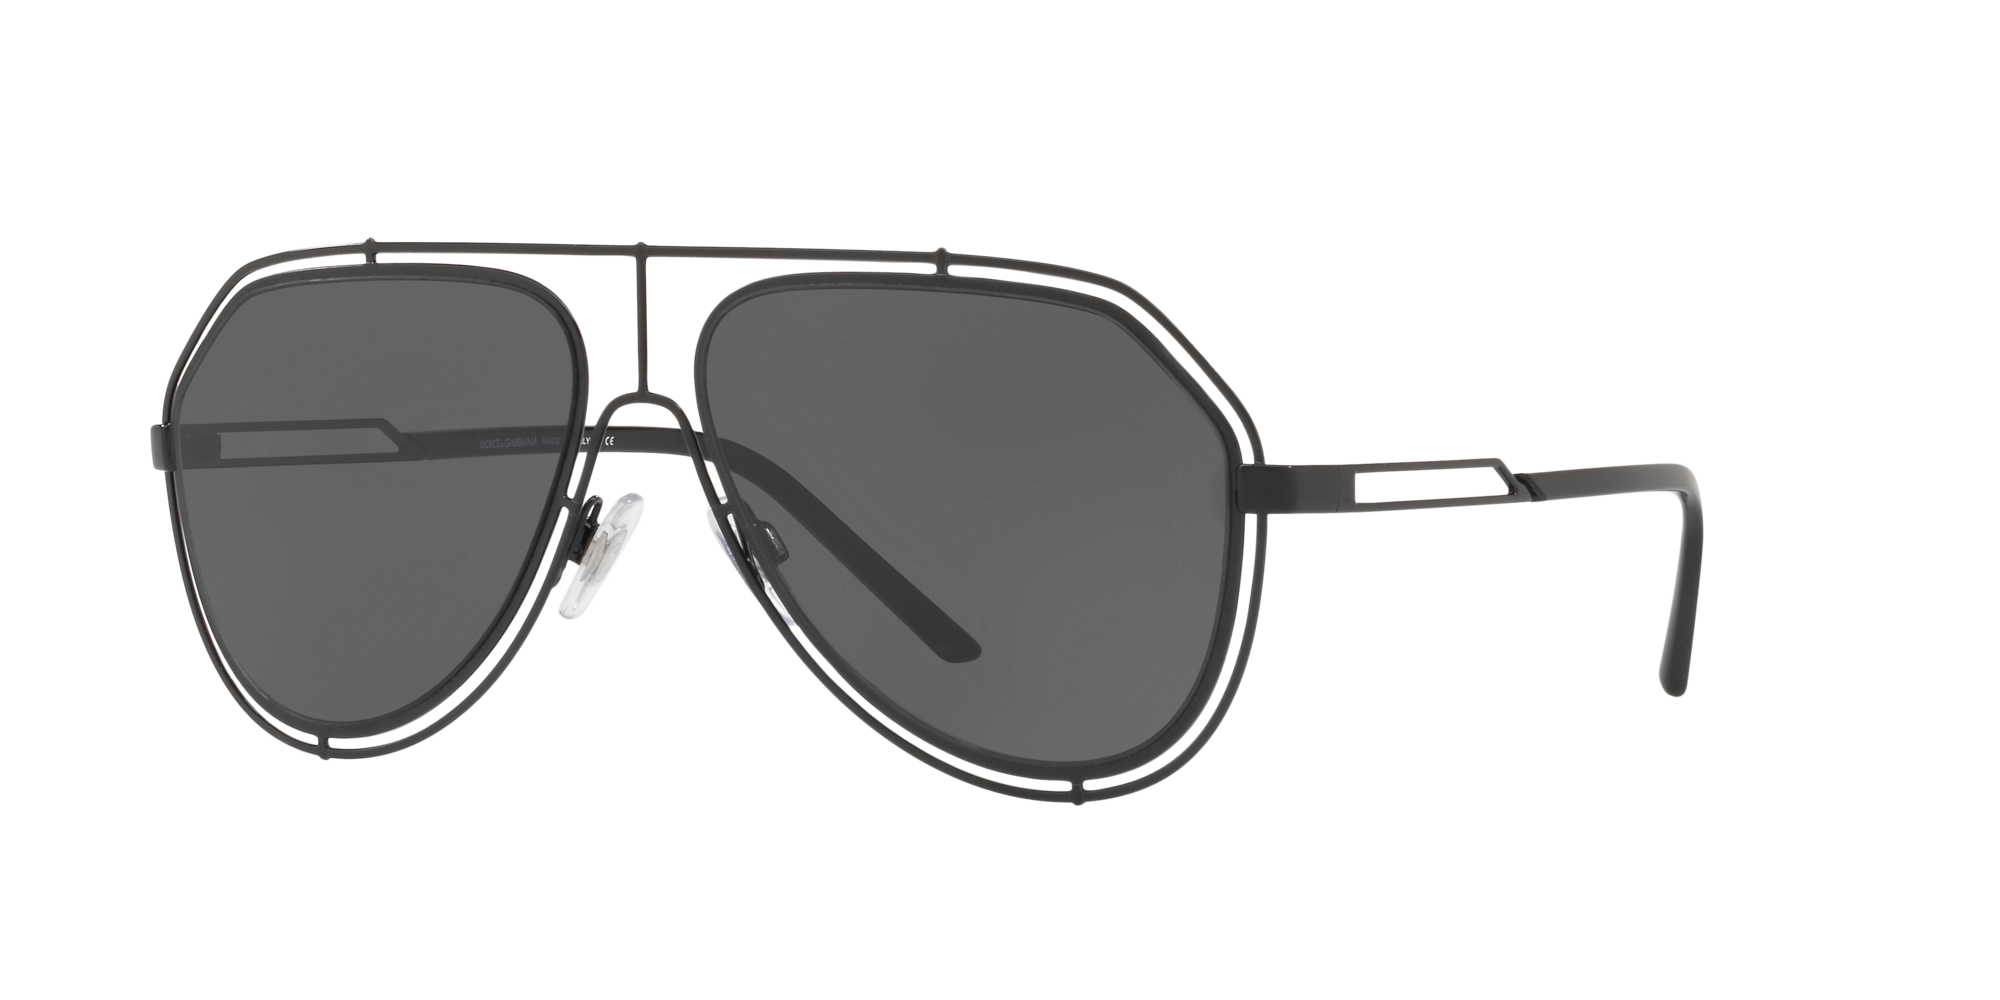 dolce and gabbana aviator sunglasses